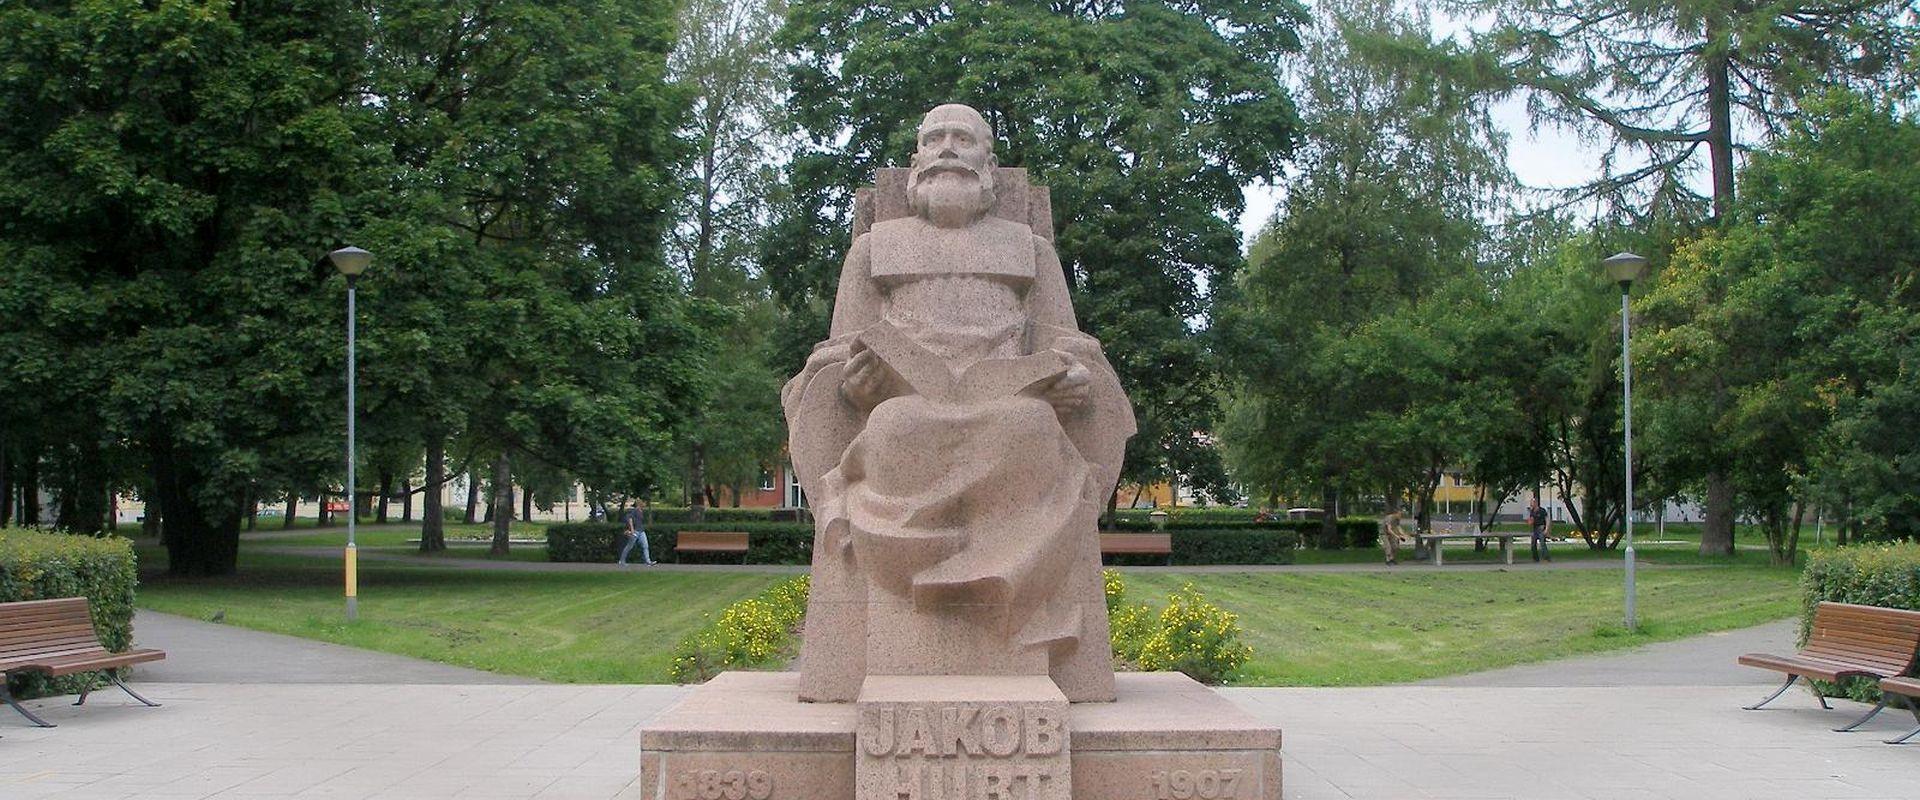 Monument to Jakob Hurt